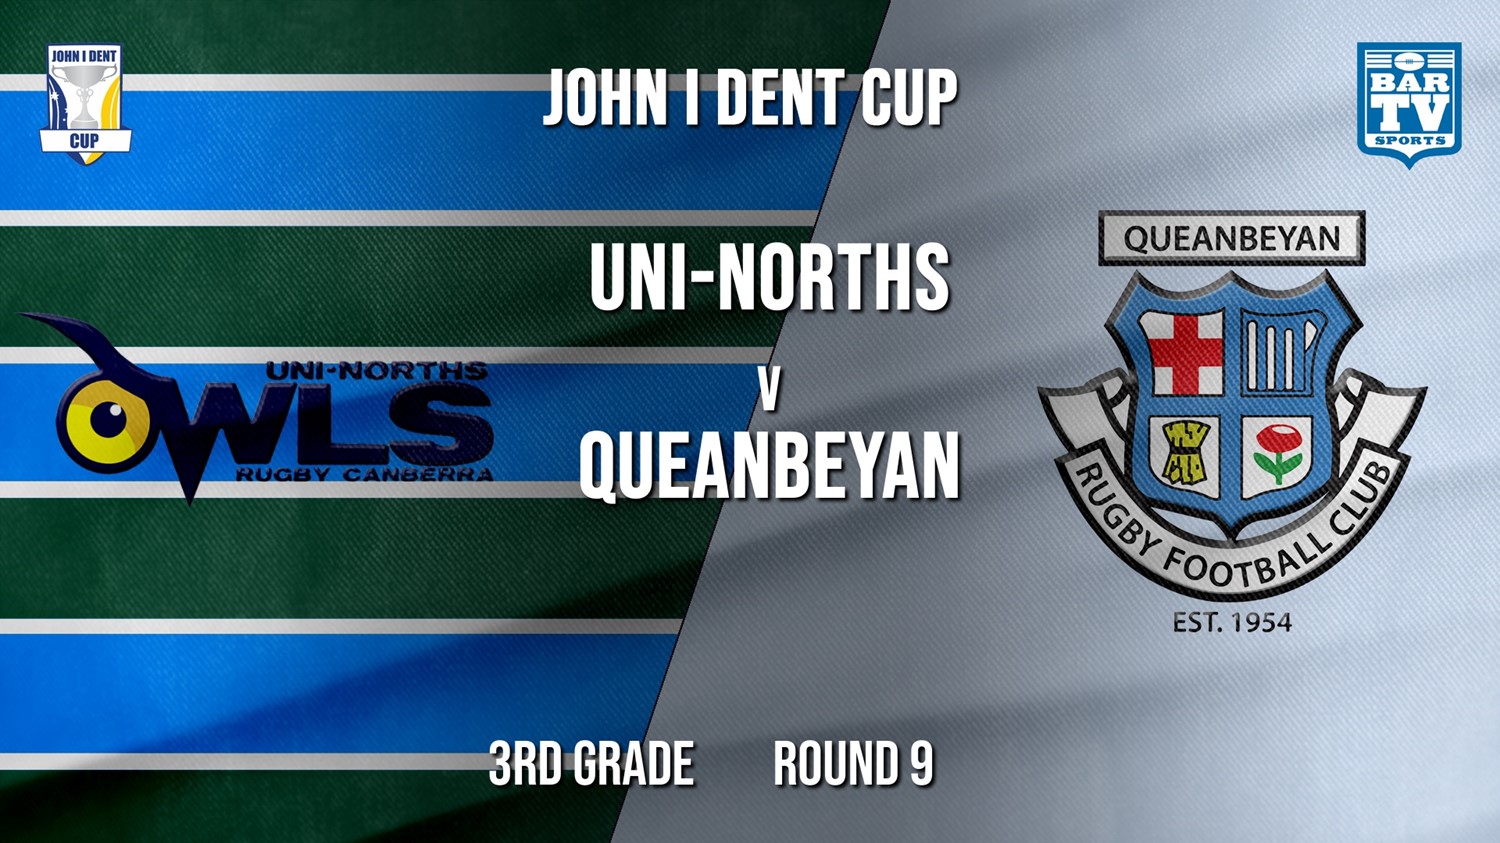 John I Dent Round 9 - 3rd Grade - UNI-Norths v Queanbeyan Whites (1) Minigame Slate Image